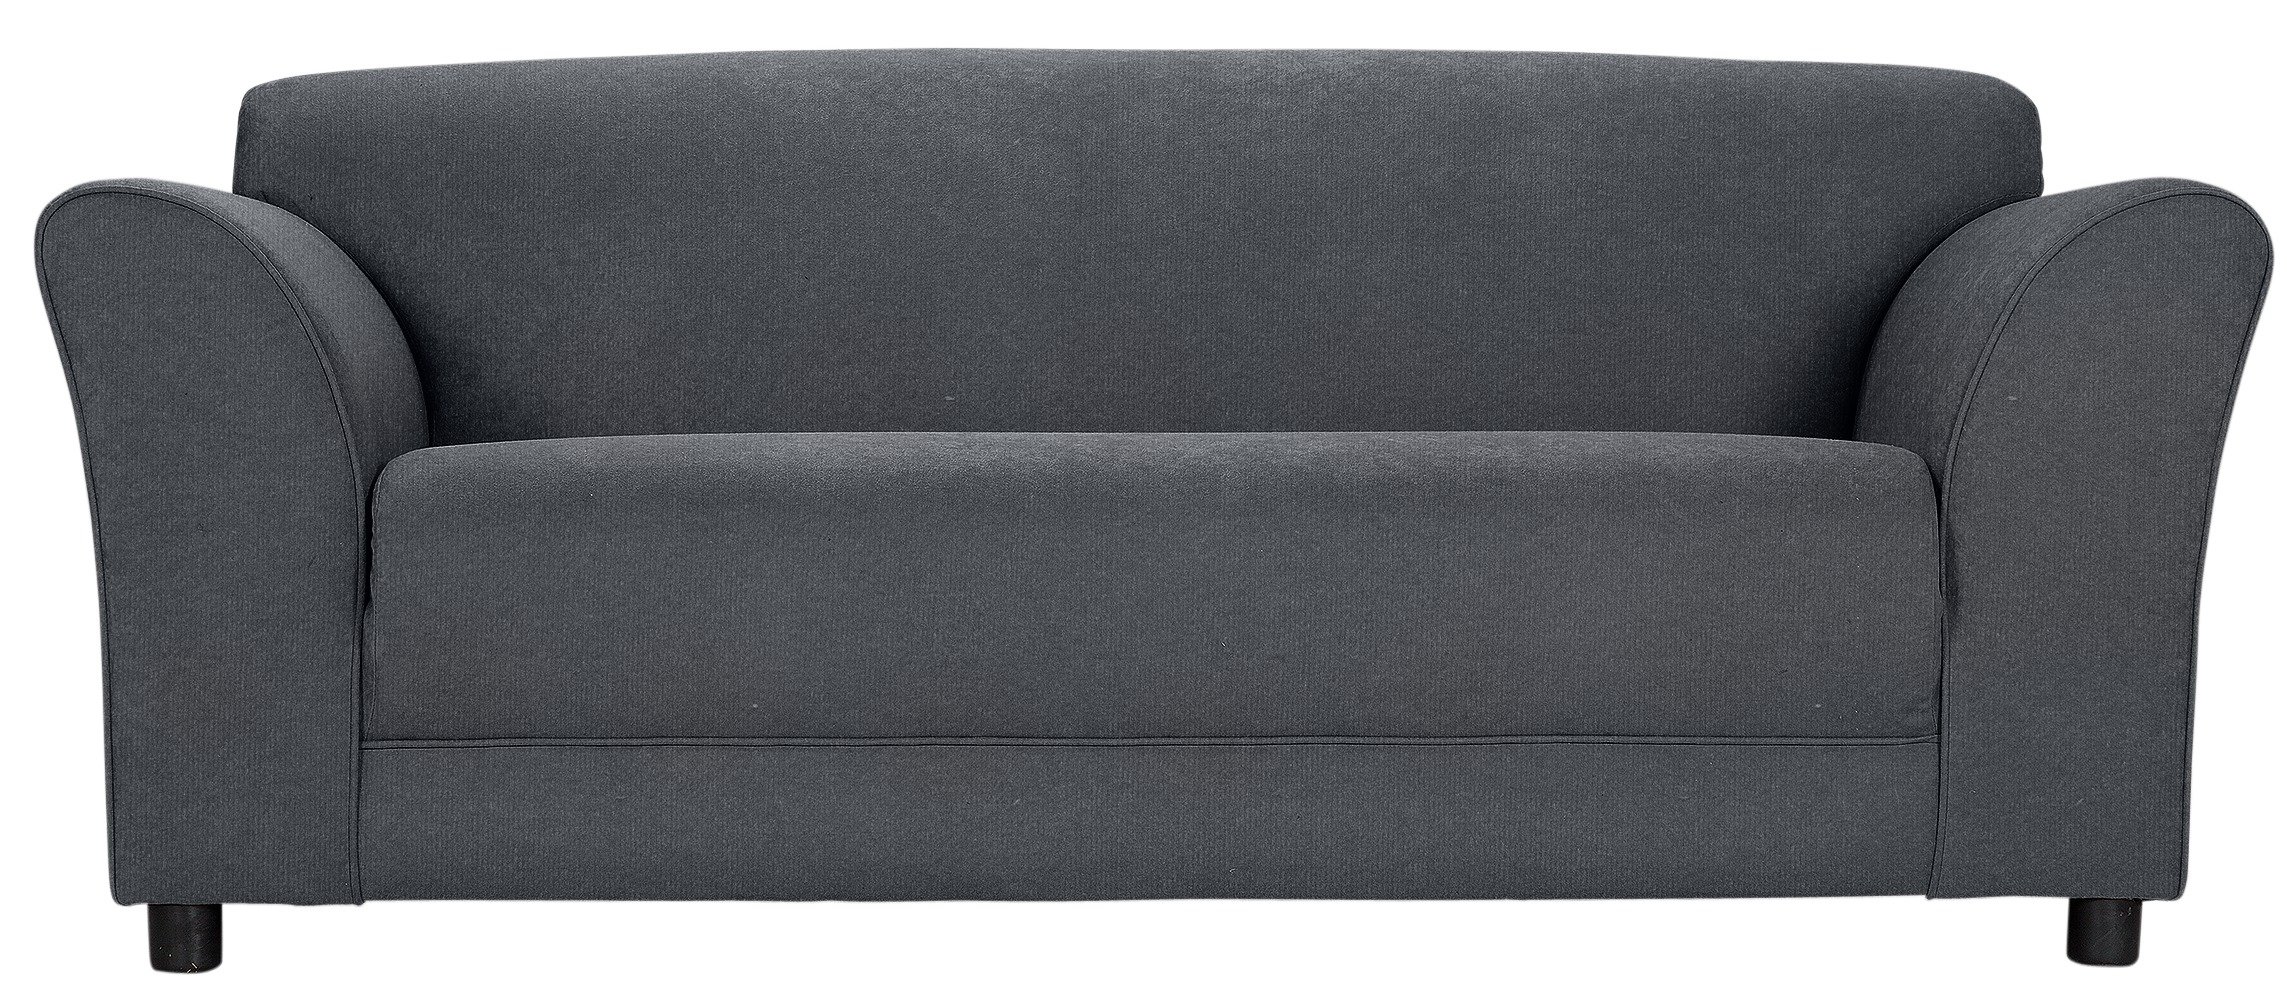 Argos Home Jenna Compact 3 Seater Fabric Sofa - Charcoal